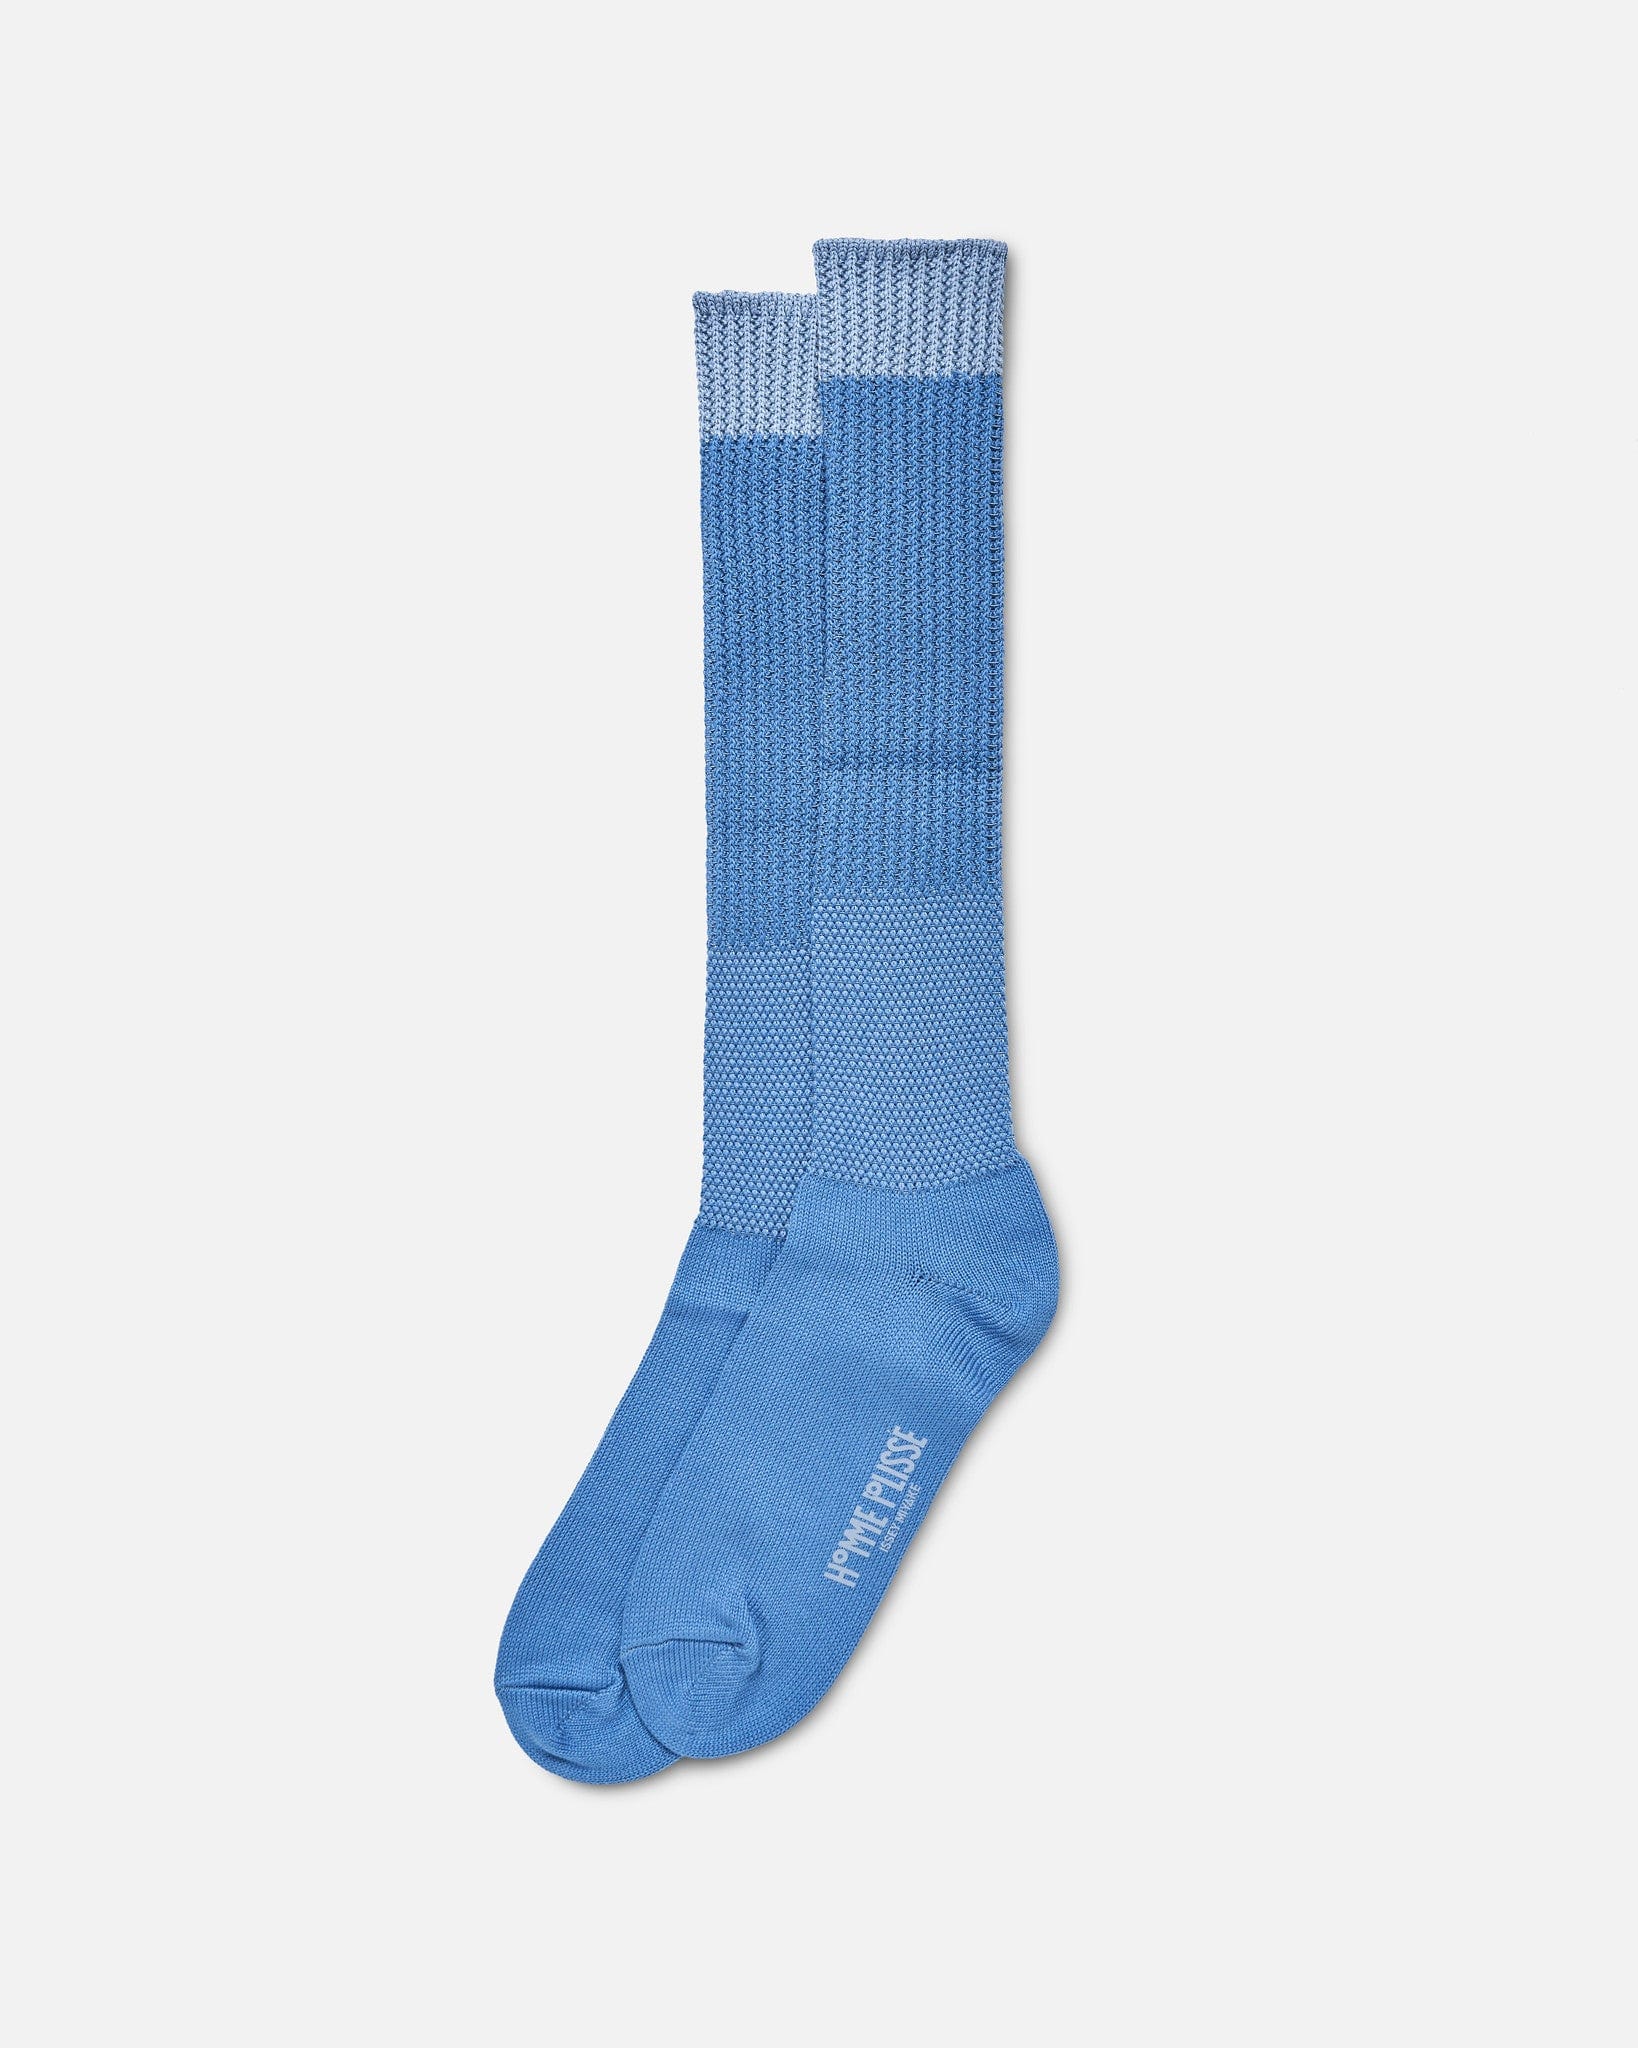 Homme Plissé Issey Miyake Men's Socks O/S Seed Stitch Socks in Blue